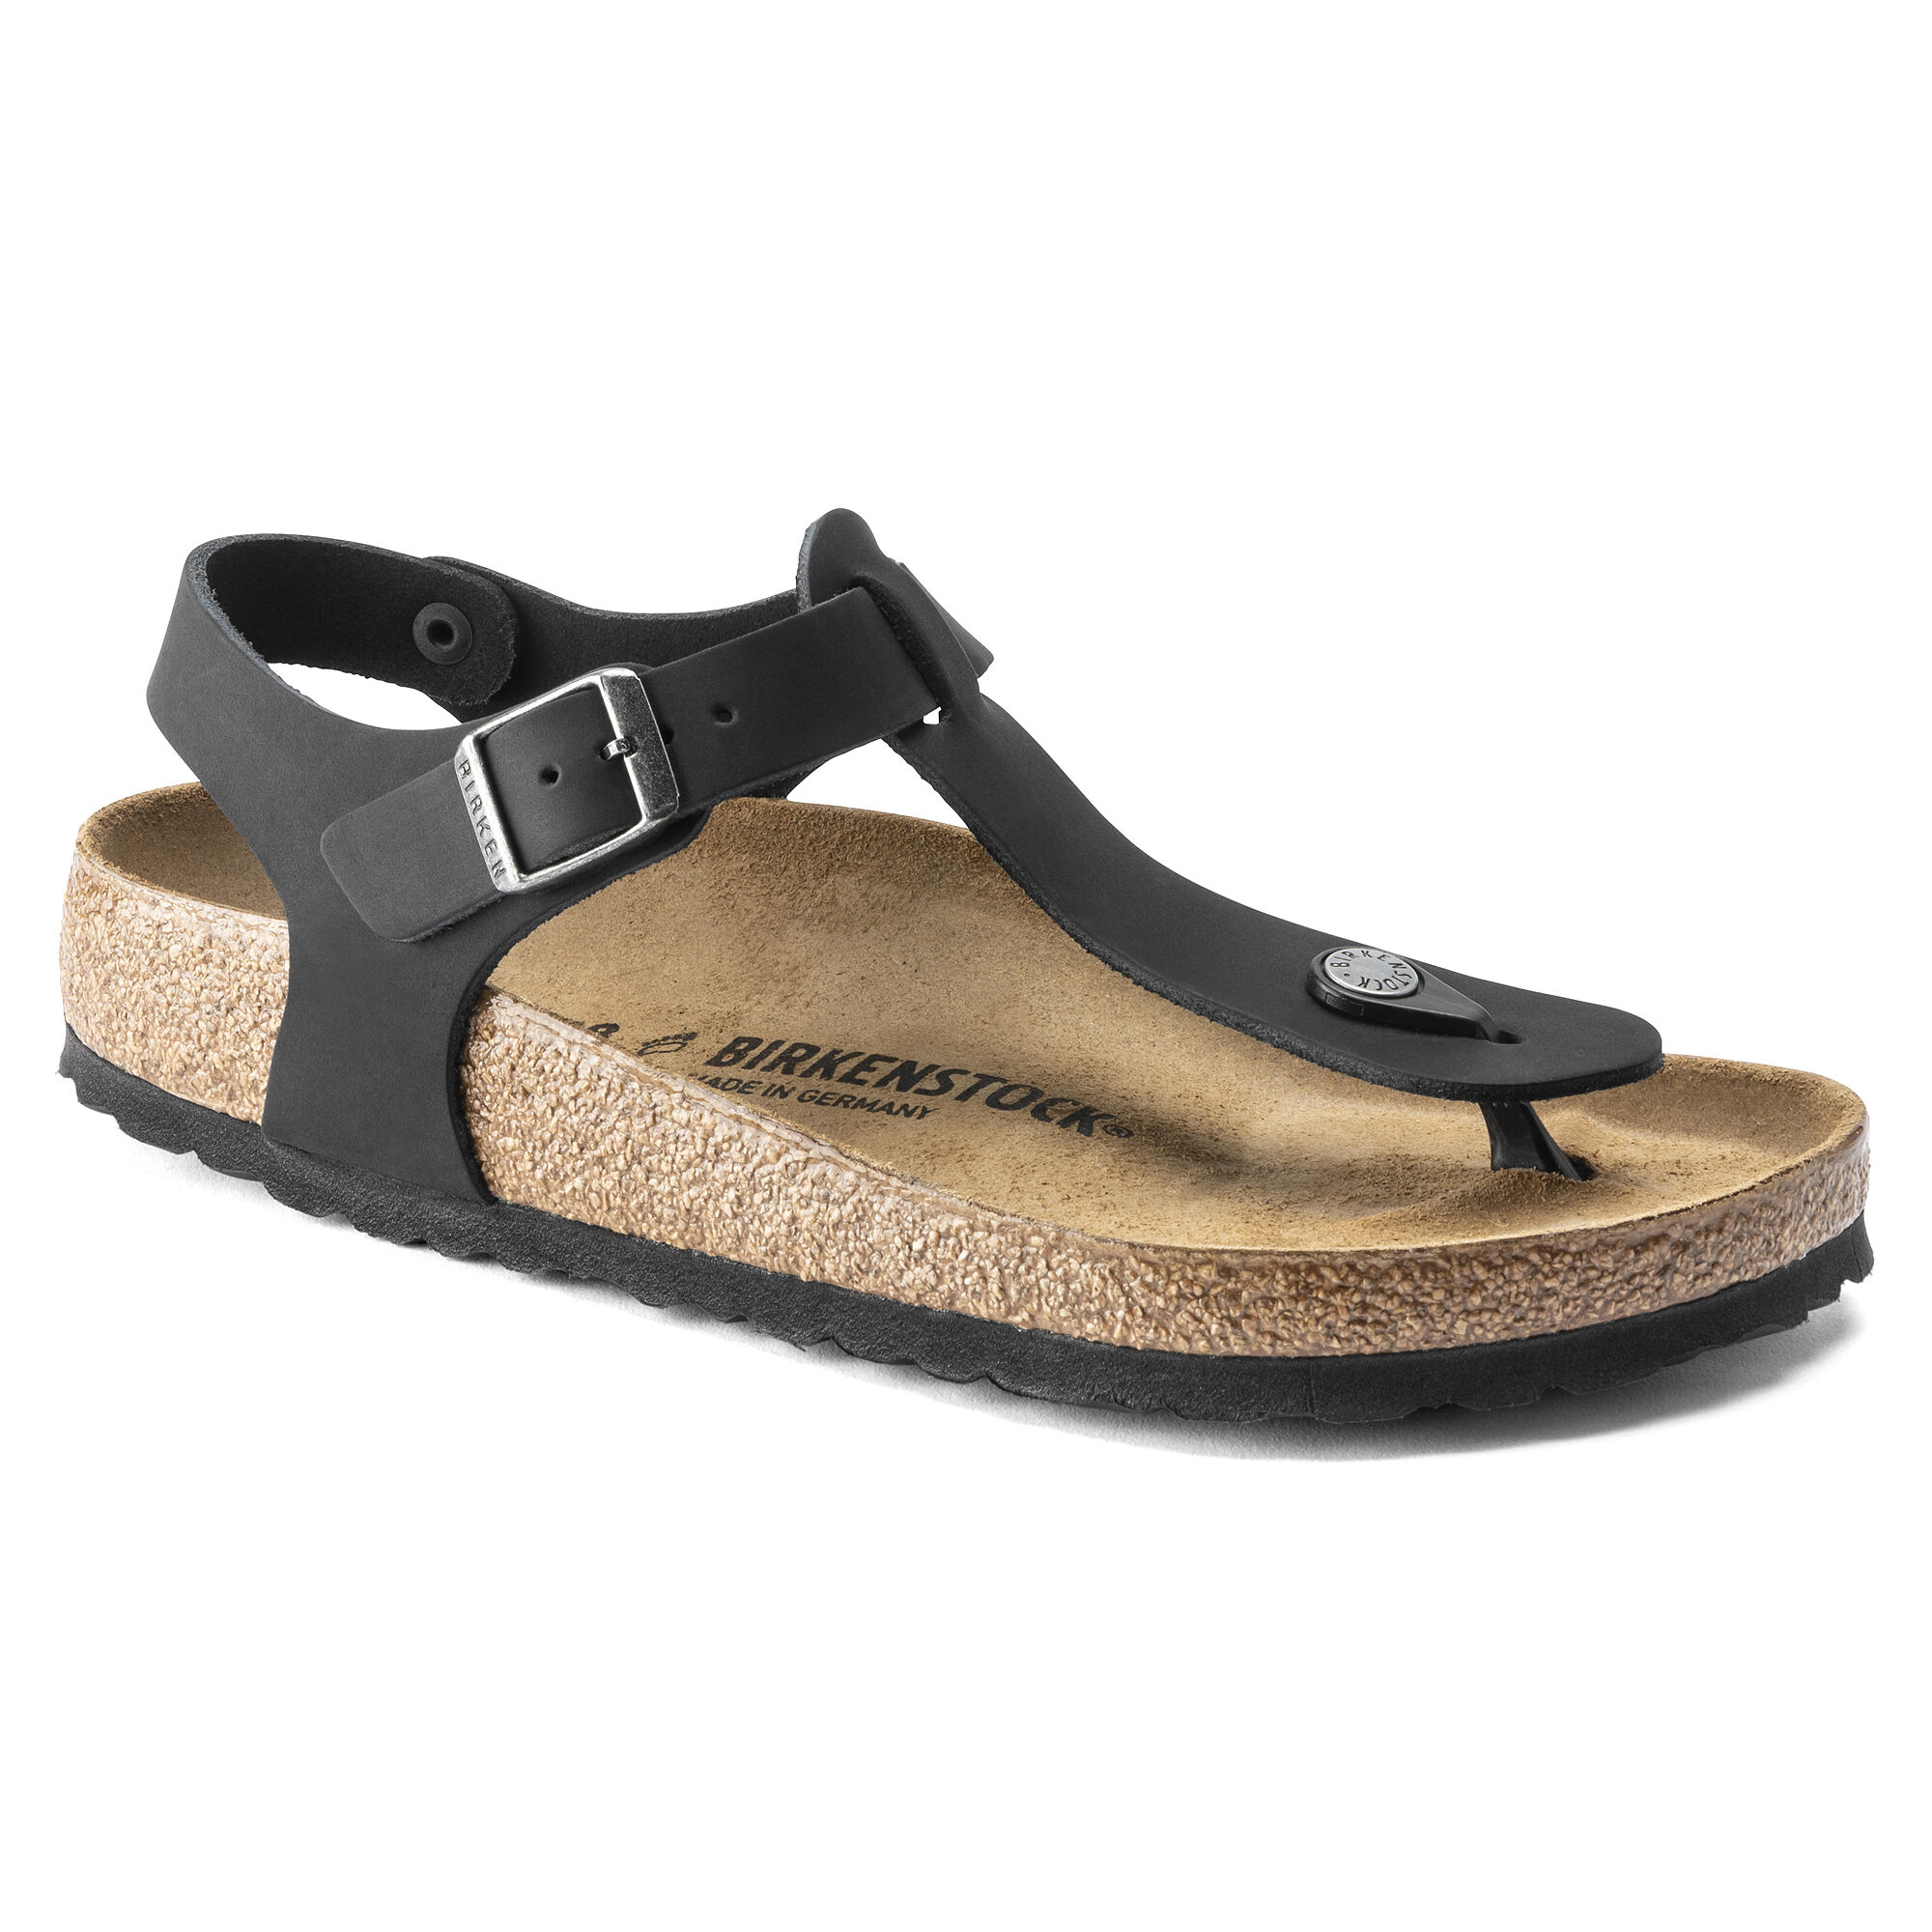 Men's sandals with backstraps | shop at 